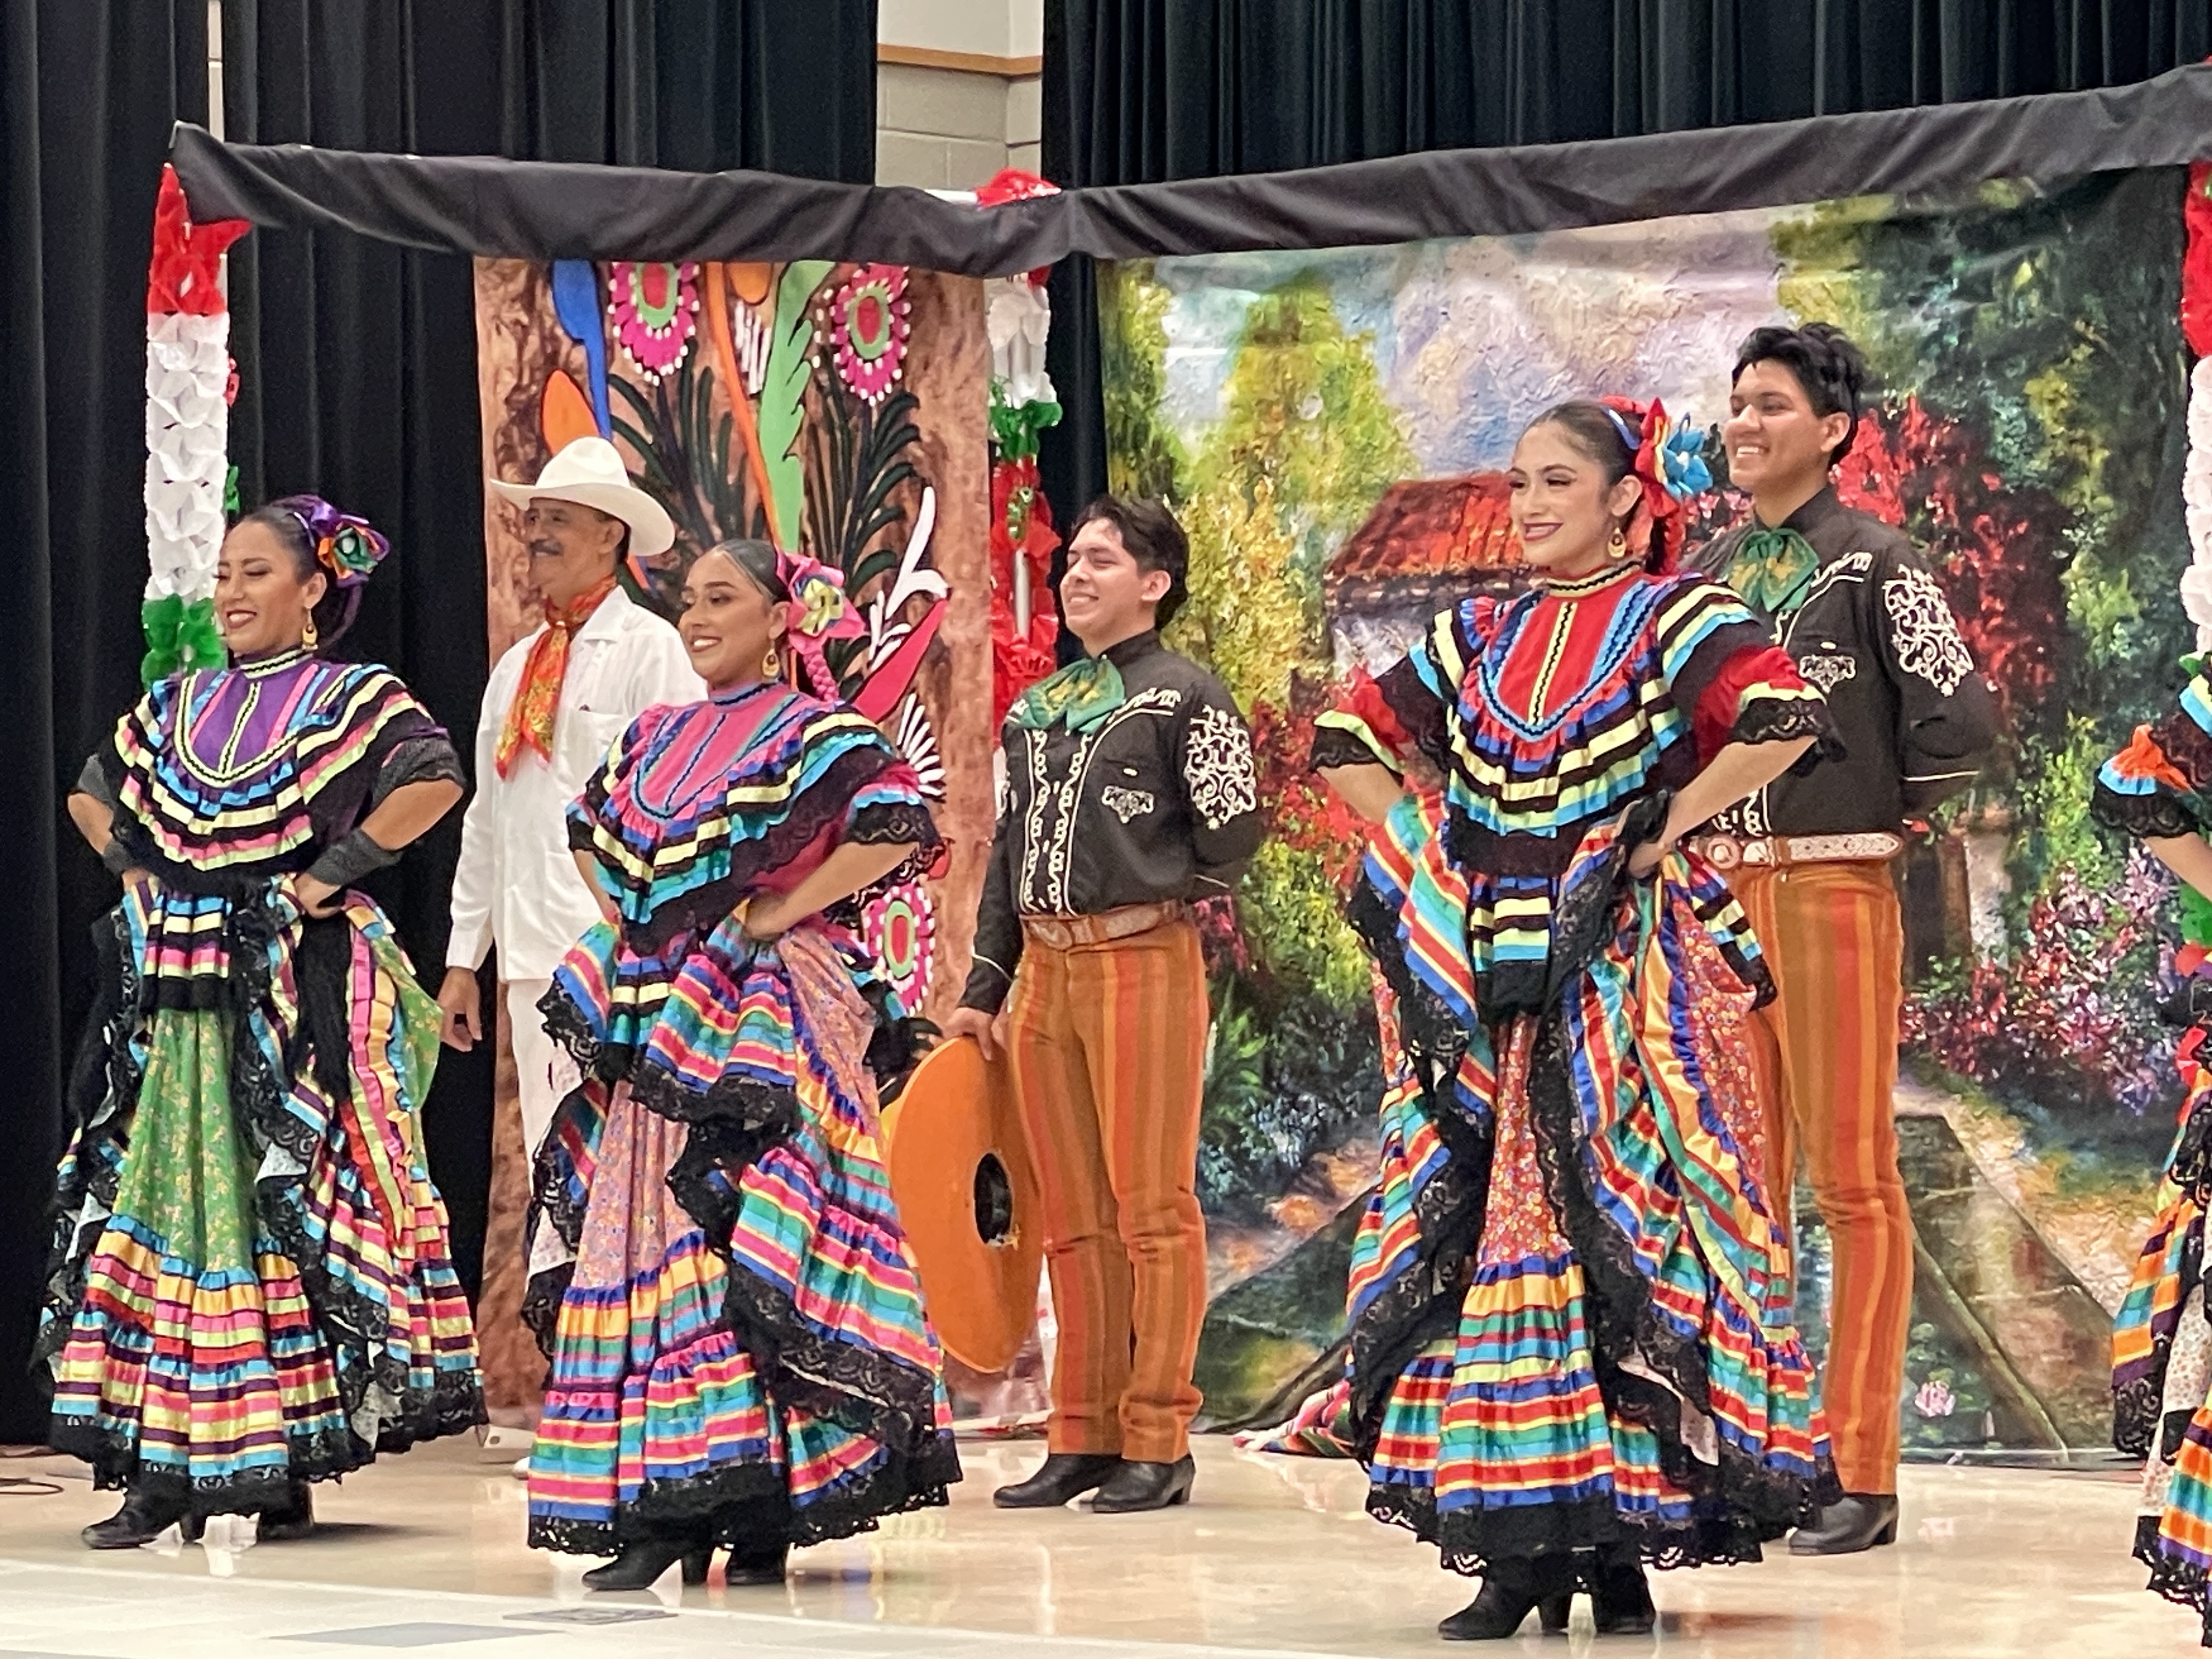 dancers wearing traditional Hispanic attire